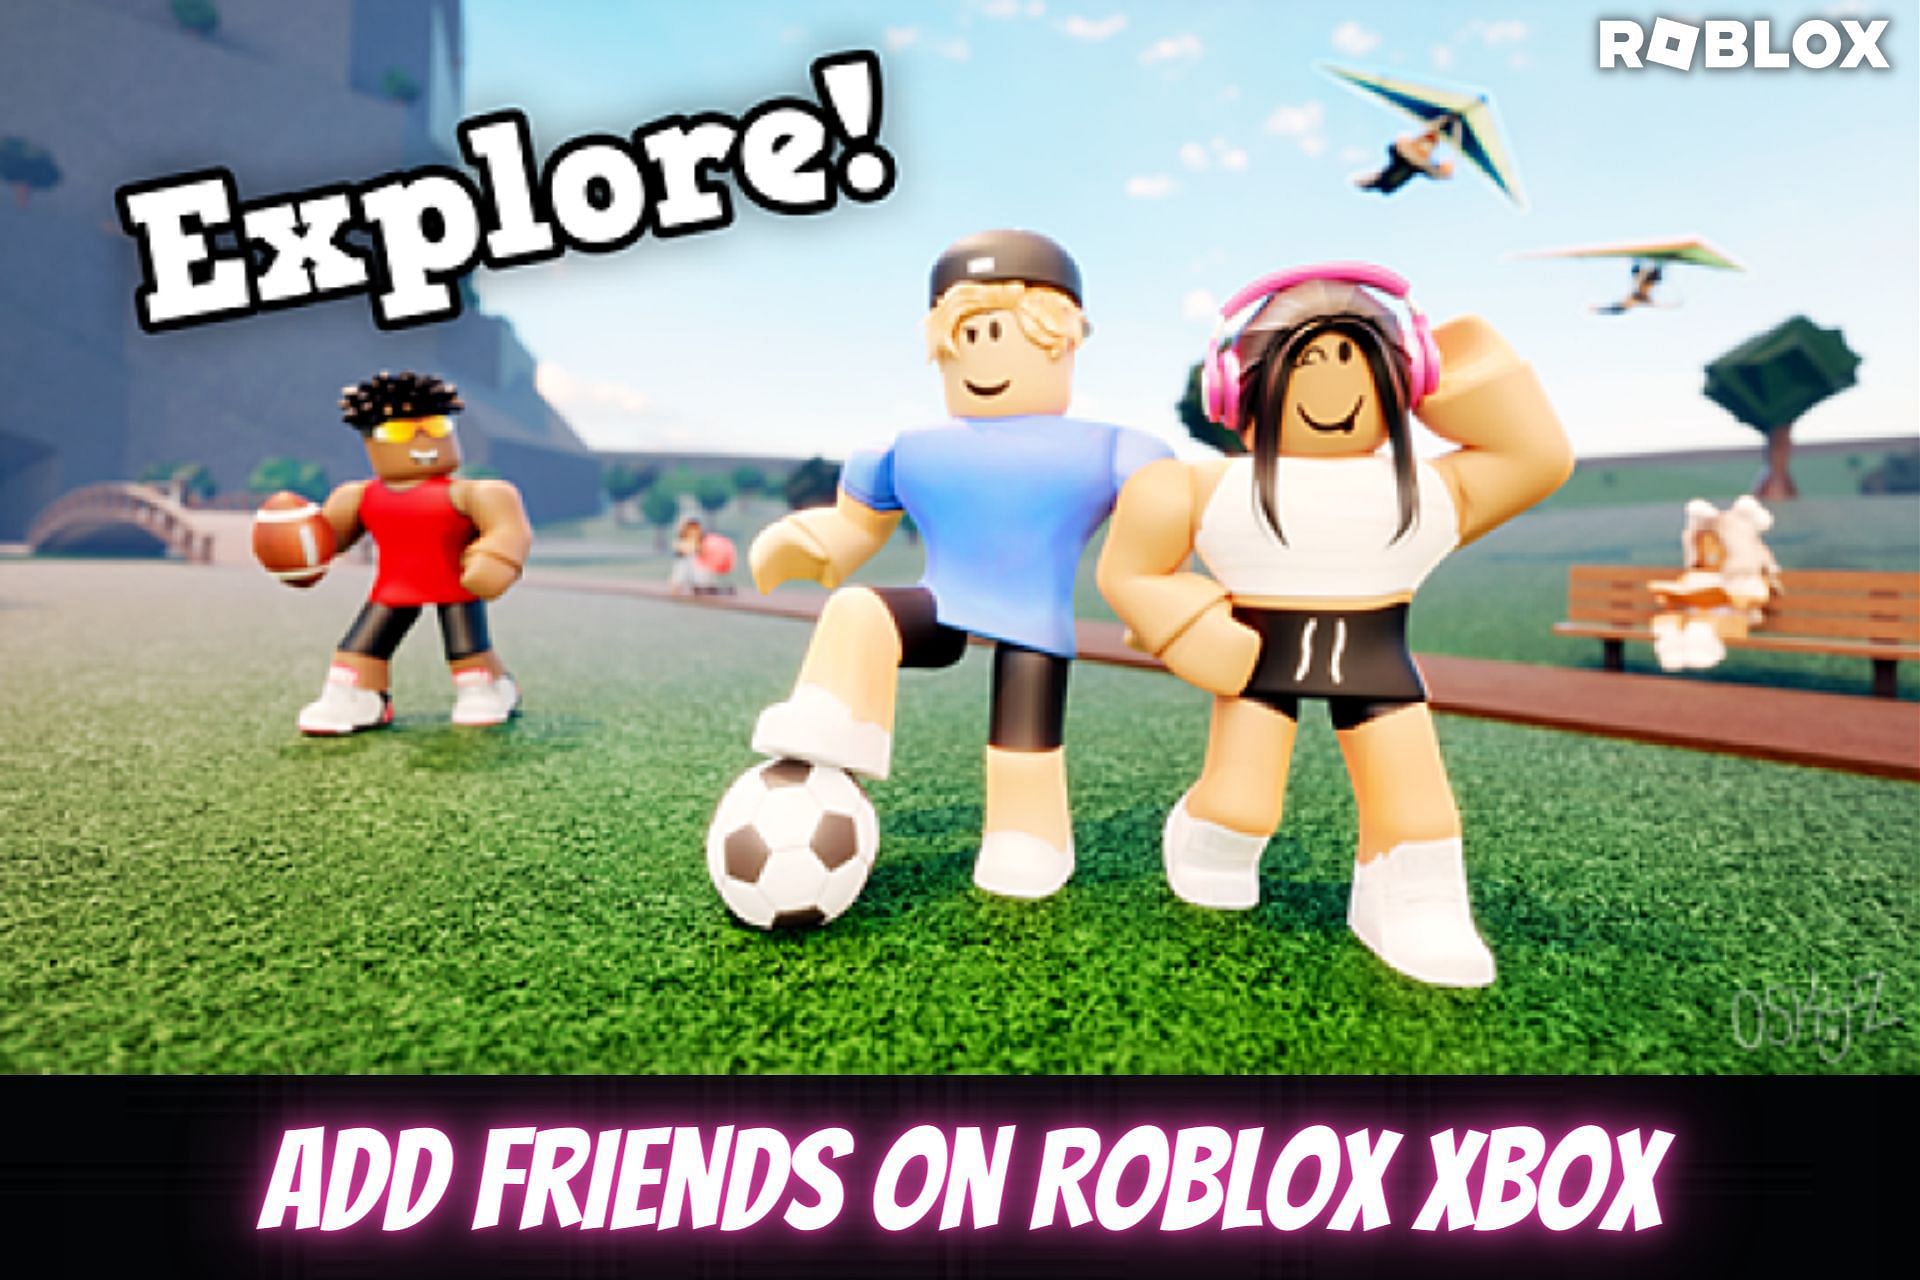 Roblox player – make friends in Roblox